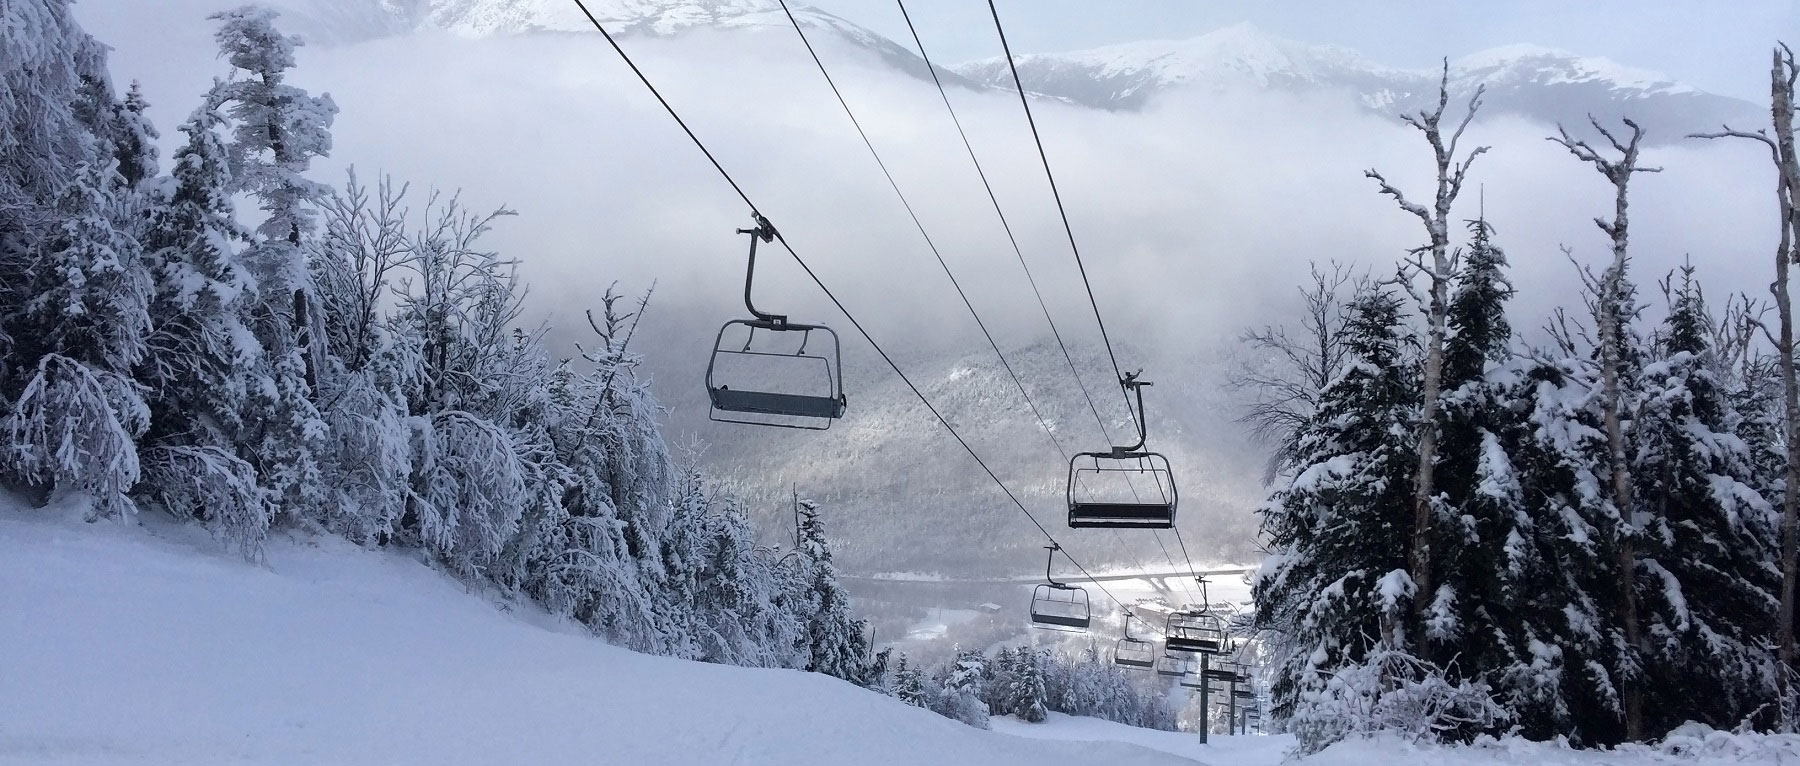 NH Snowbound Ski Lift - Photo Credit Shutterstock